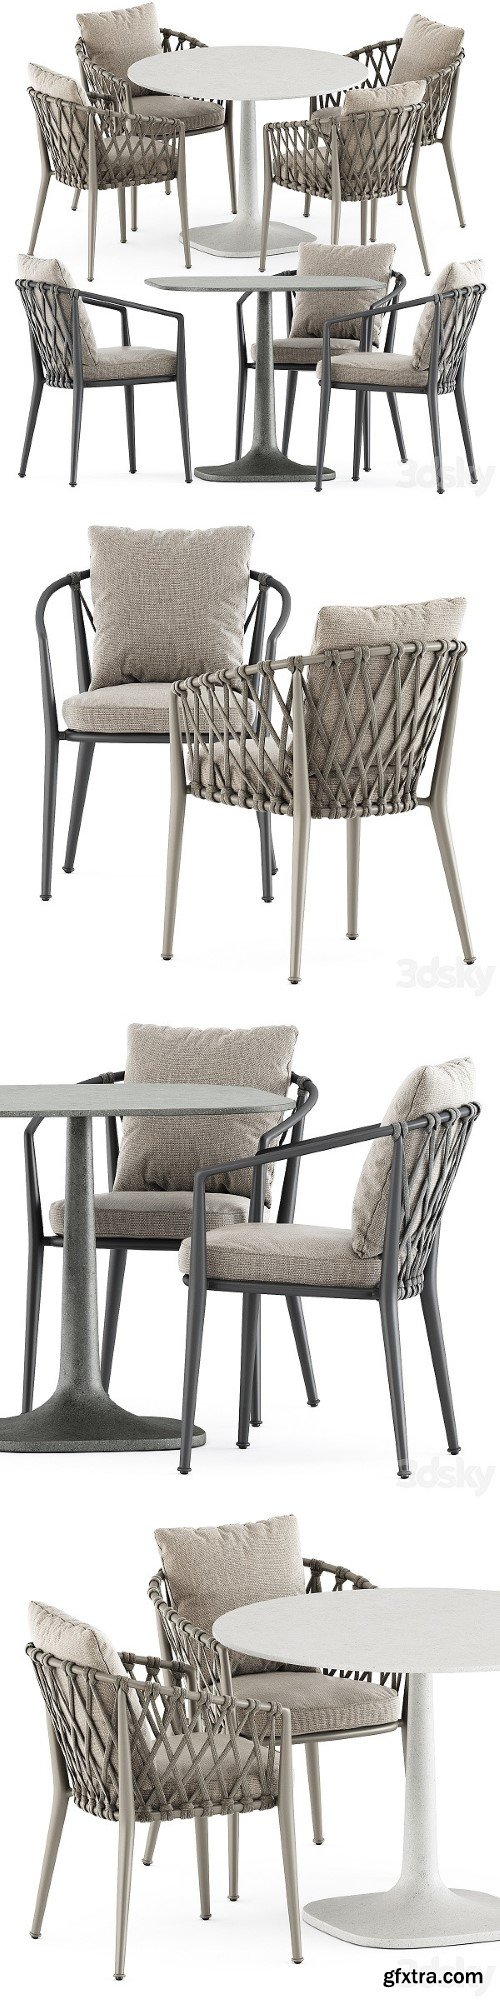 Erica Outdoor Chair and Fiore Outdoor Table by Bebitalia | Vray+Corona